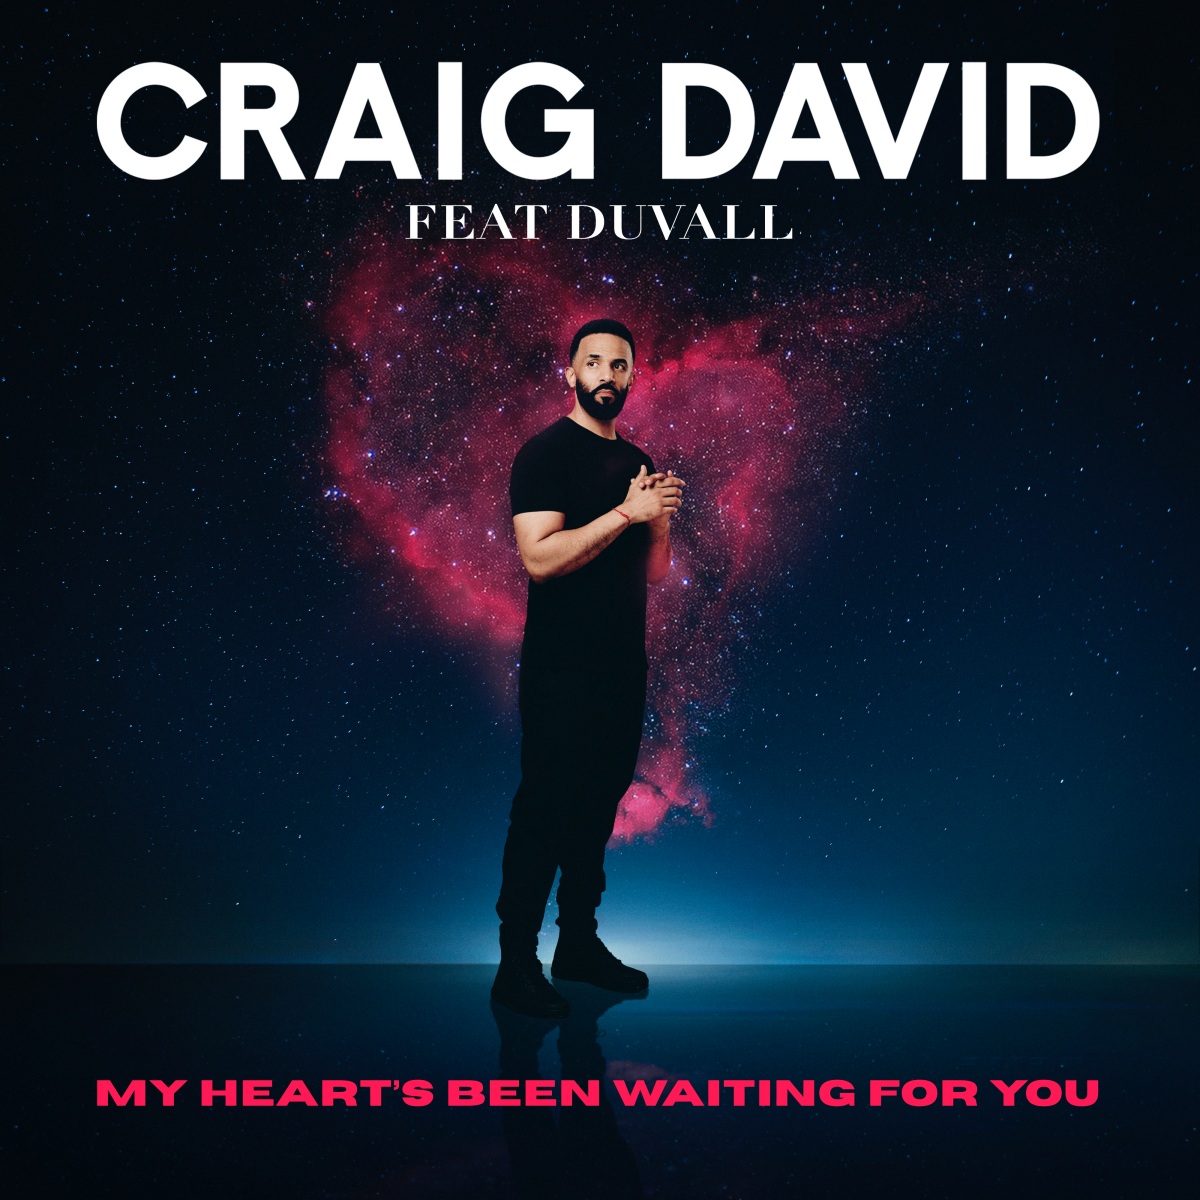 Craig DavidがDuvallをフィーチャーした新曲「My Heart's Been Waiting For You」をリリース |  block.fm